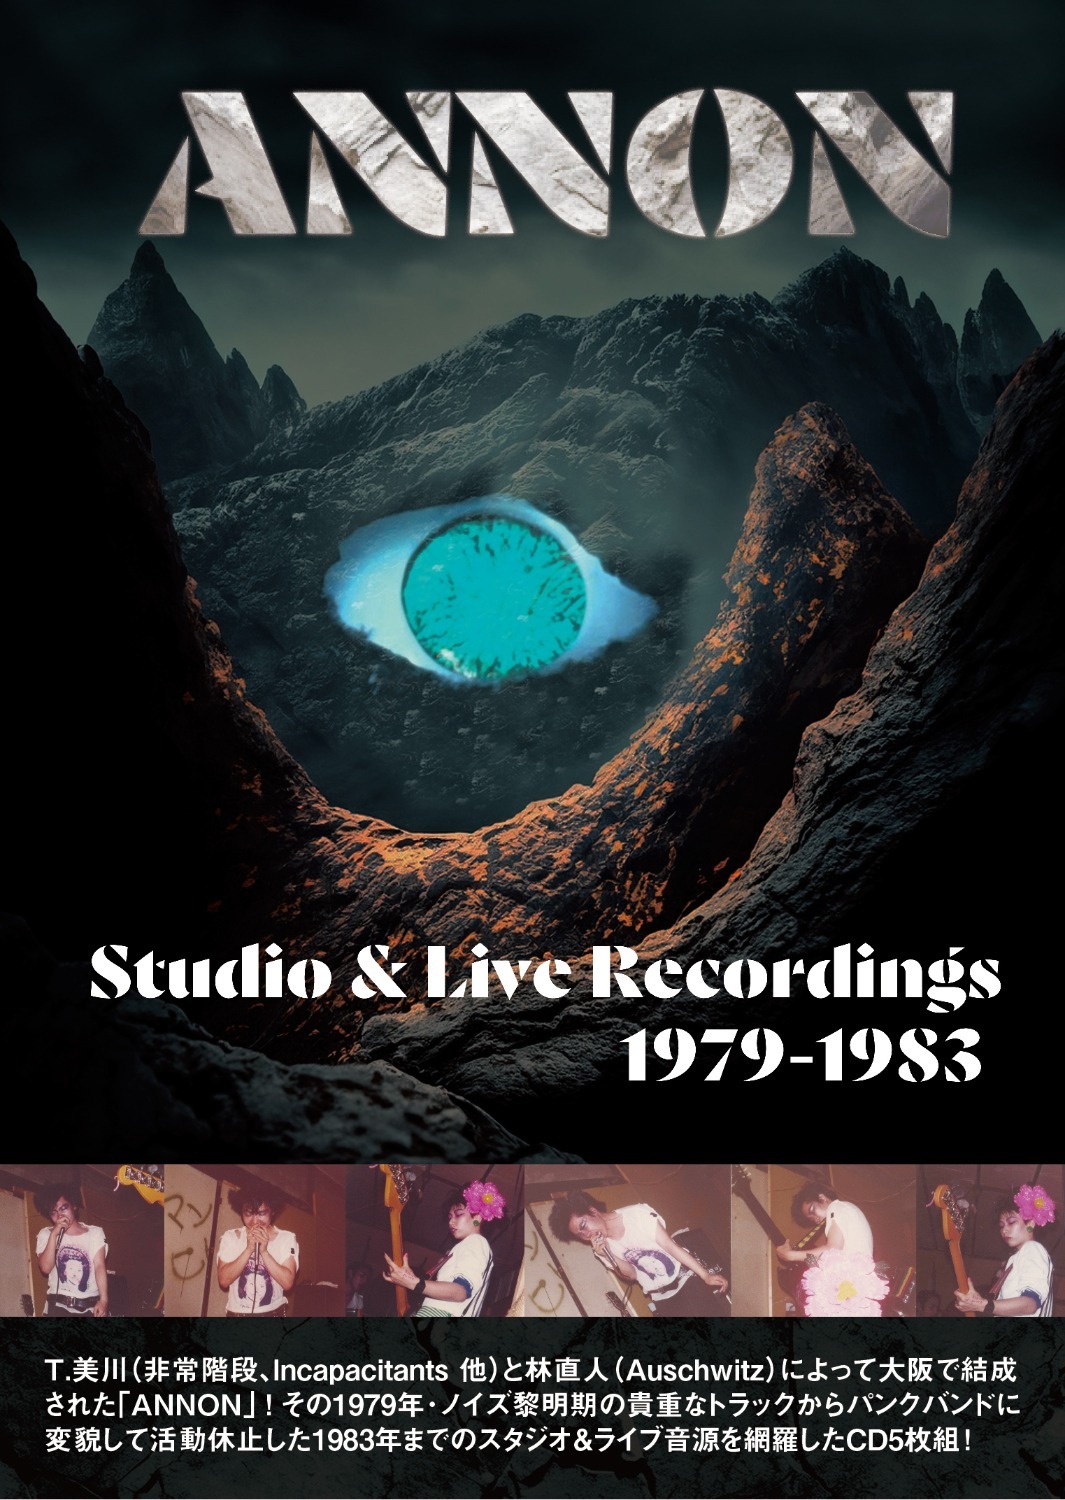 ANNON/Studio ＆ Live Recordings 1979-1983・特典付き限定仕様(5CD+ボーナスCD)12月13日発売